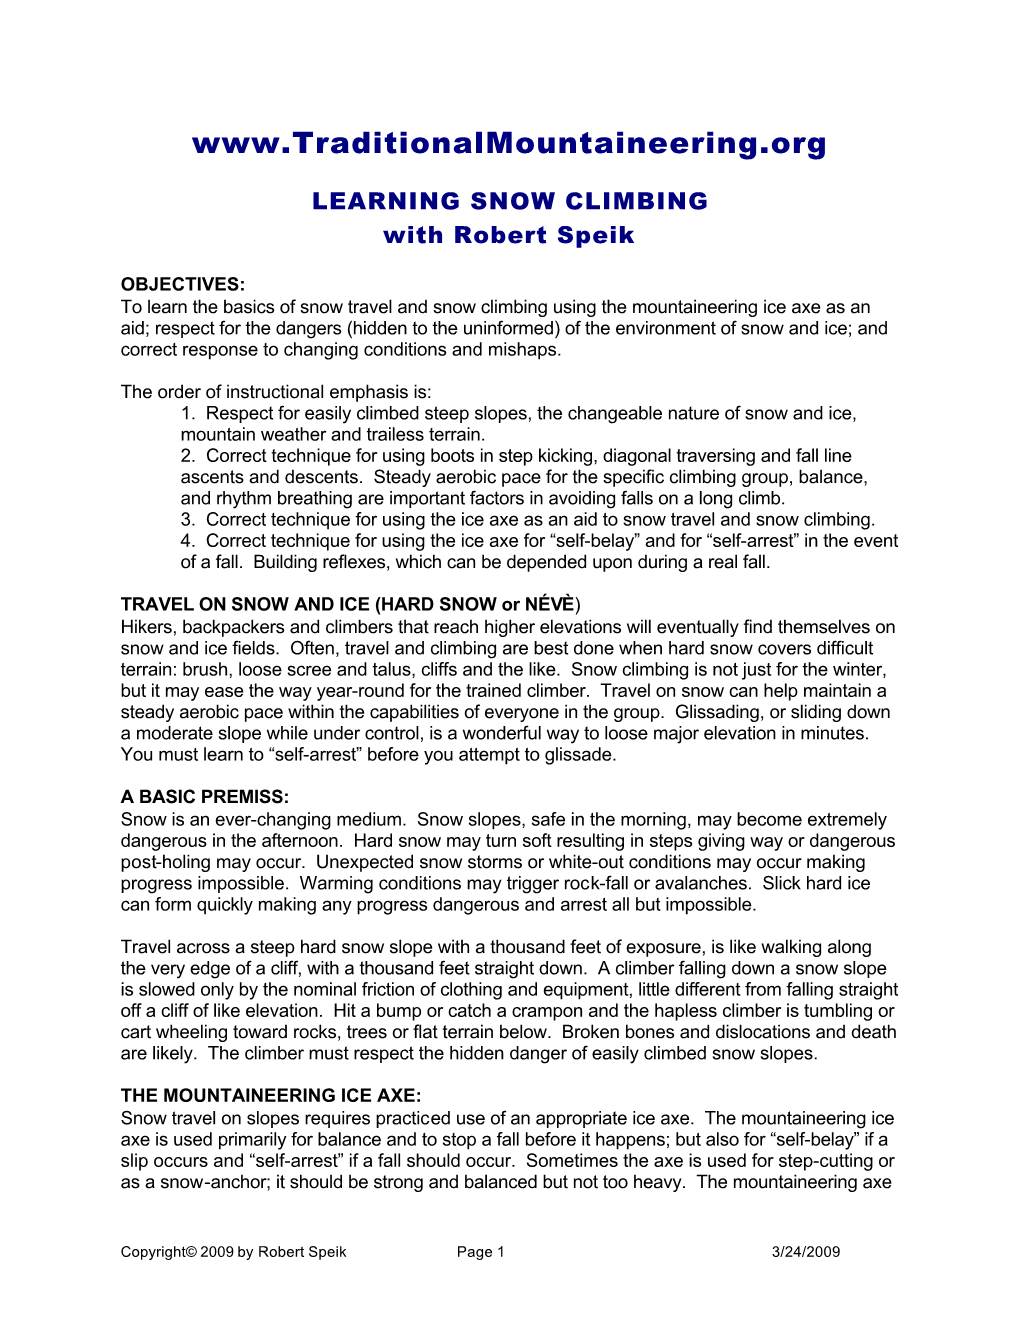 Steep Snow Climbing Skills and Ice Axe Belay/Arrest Practice